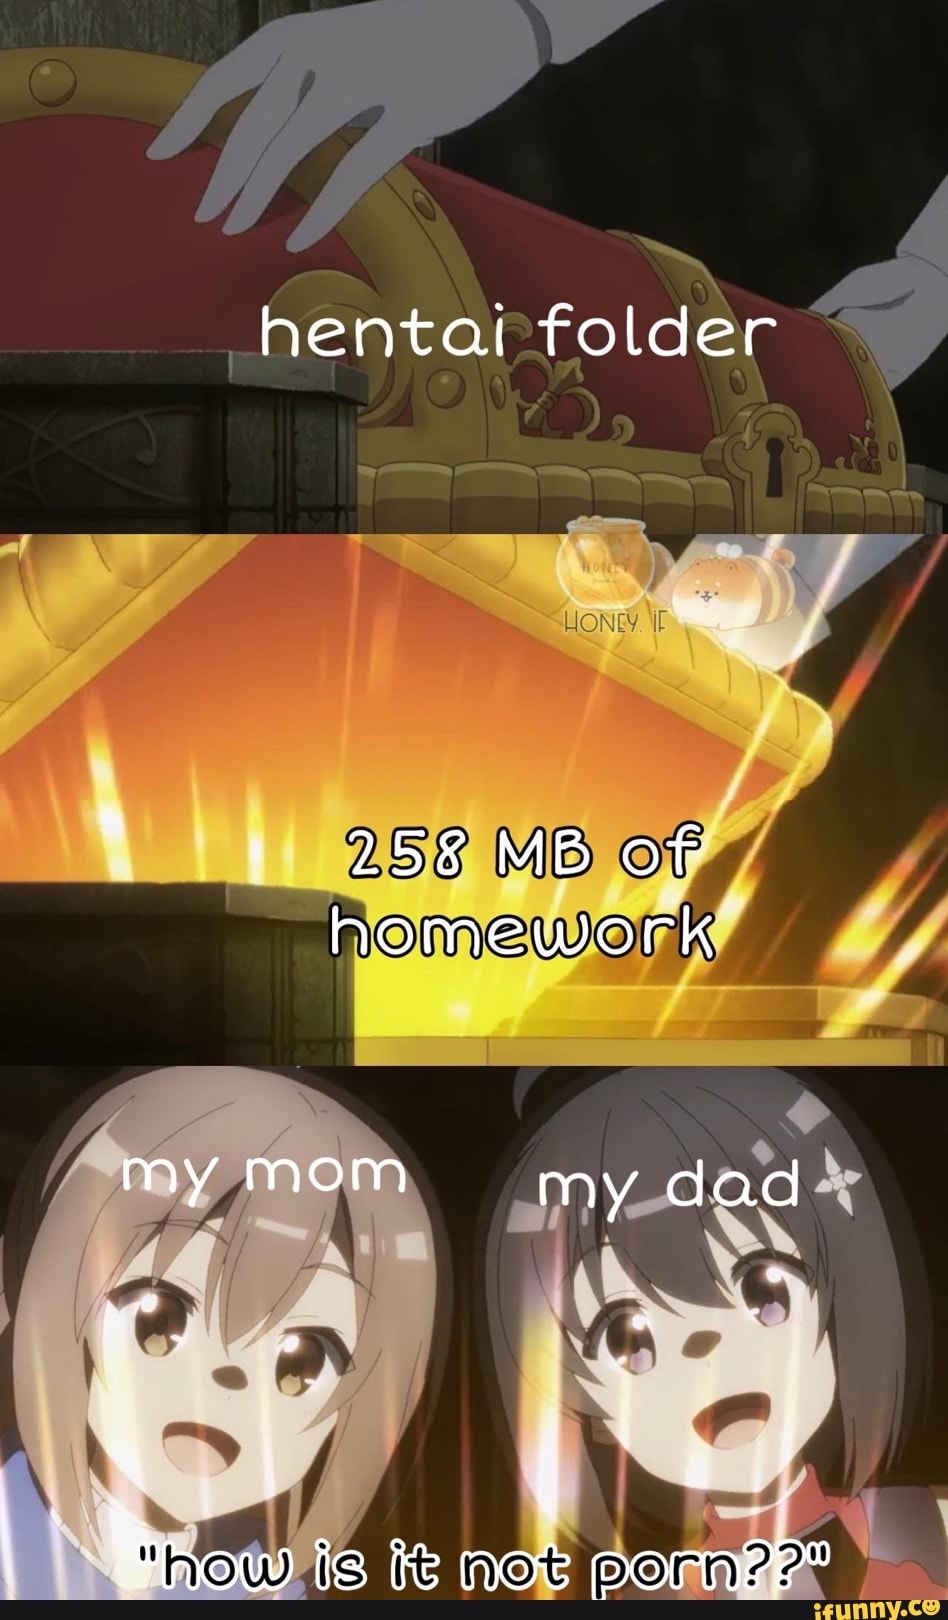 Hentai Folder - Hentai folder 258 MB of homework my mom my dad Yimow is te Noe porn???\